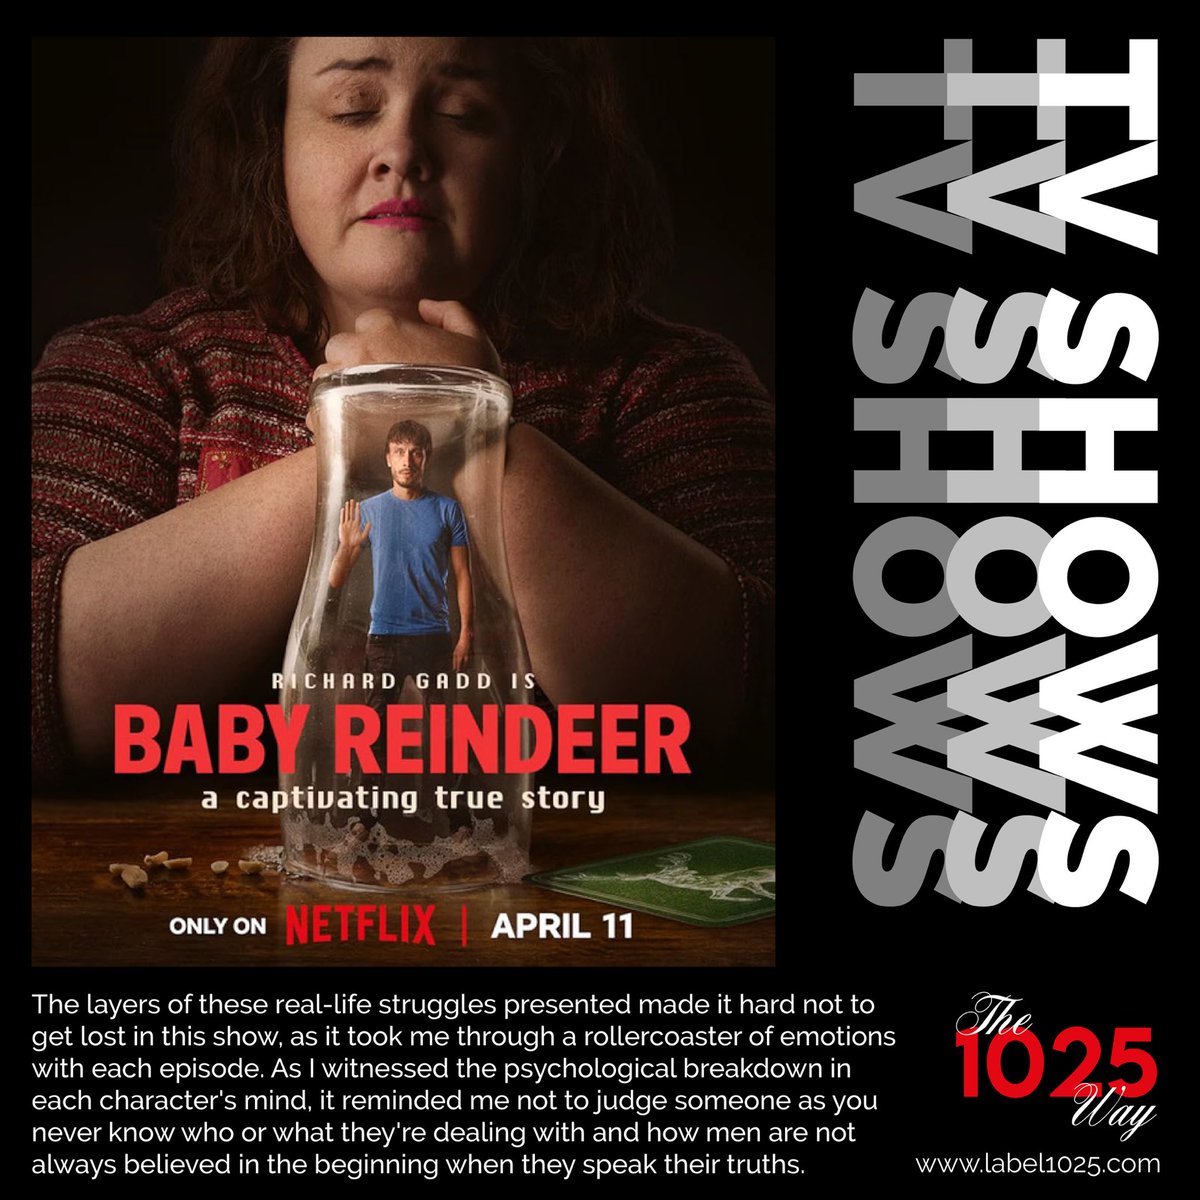 instagram.com/p/C6gc6K9IoPX/… 🔞
—————————————————————
#Label1025 #BabyReindeer #RichardGadd #JessicaGunning #NavaMau #MichaelWildman #biography #adaptation #comedy #drama #limitedseries #mentalhealth #obsession #truestory #tv #tvshow #ClerkenwellFilms #Netflix